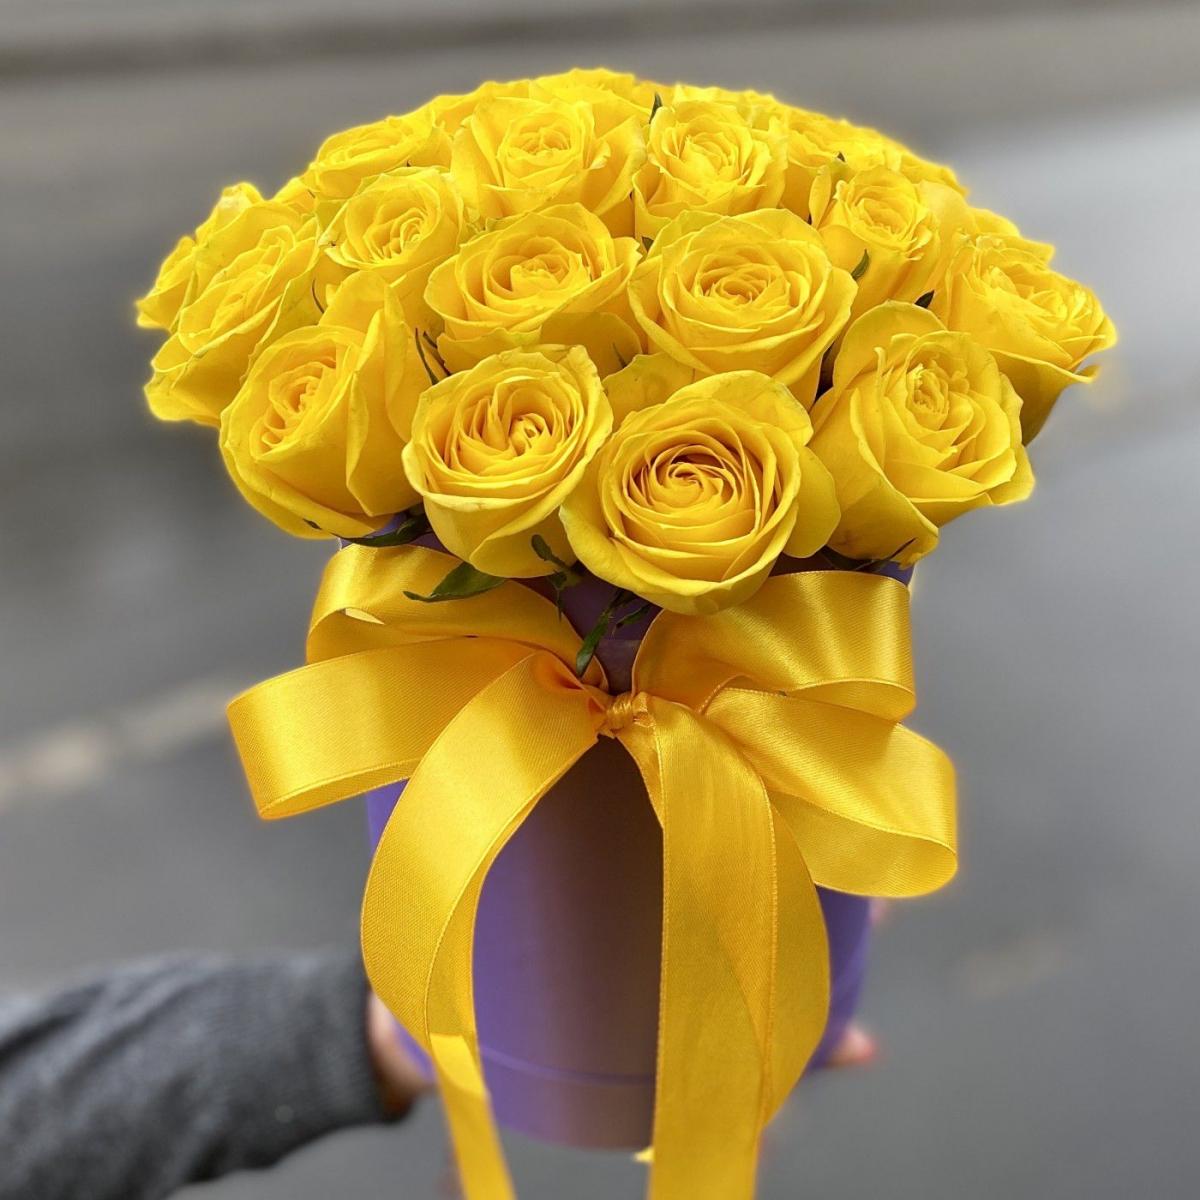 19 желтых роз (Артикул: 181684tv)